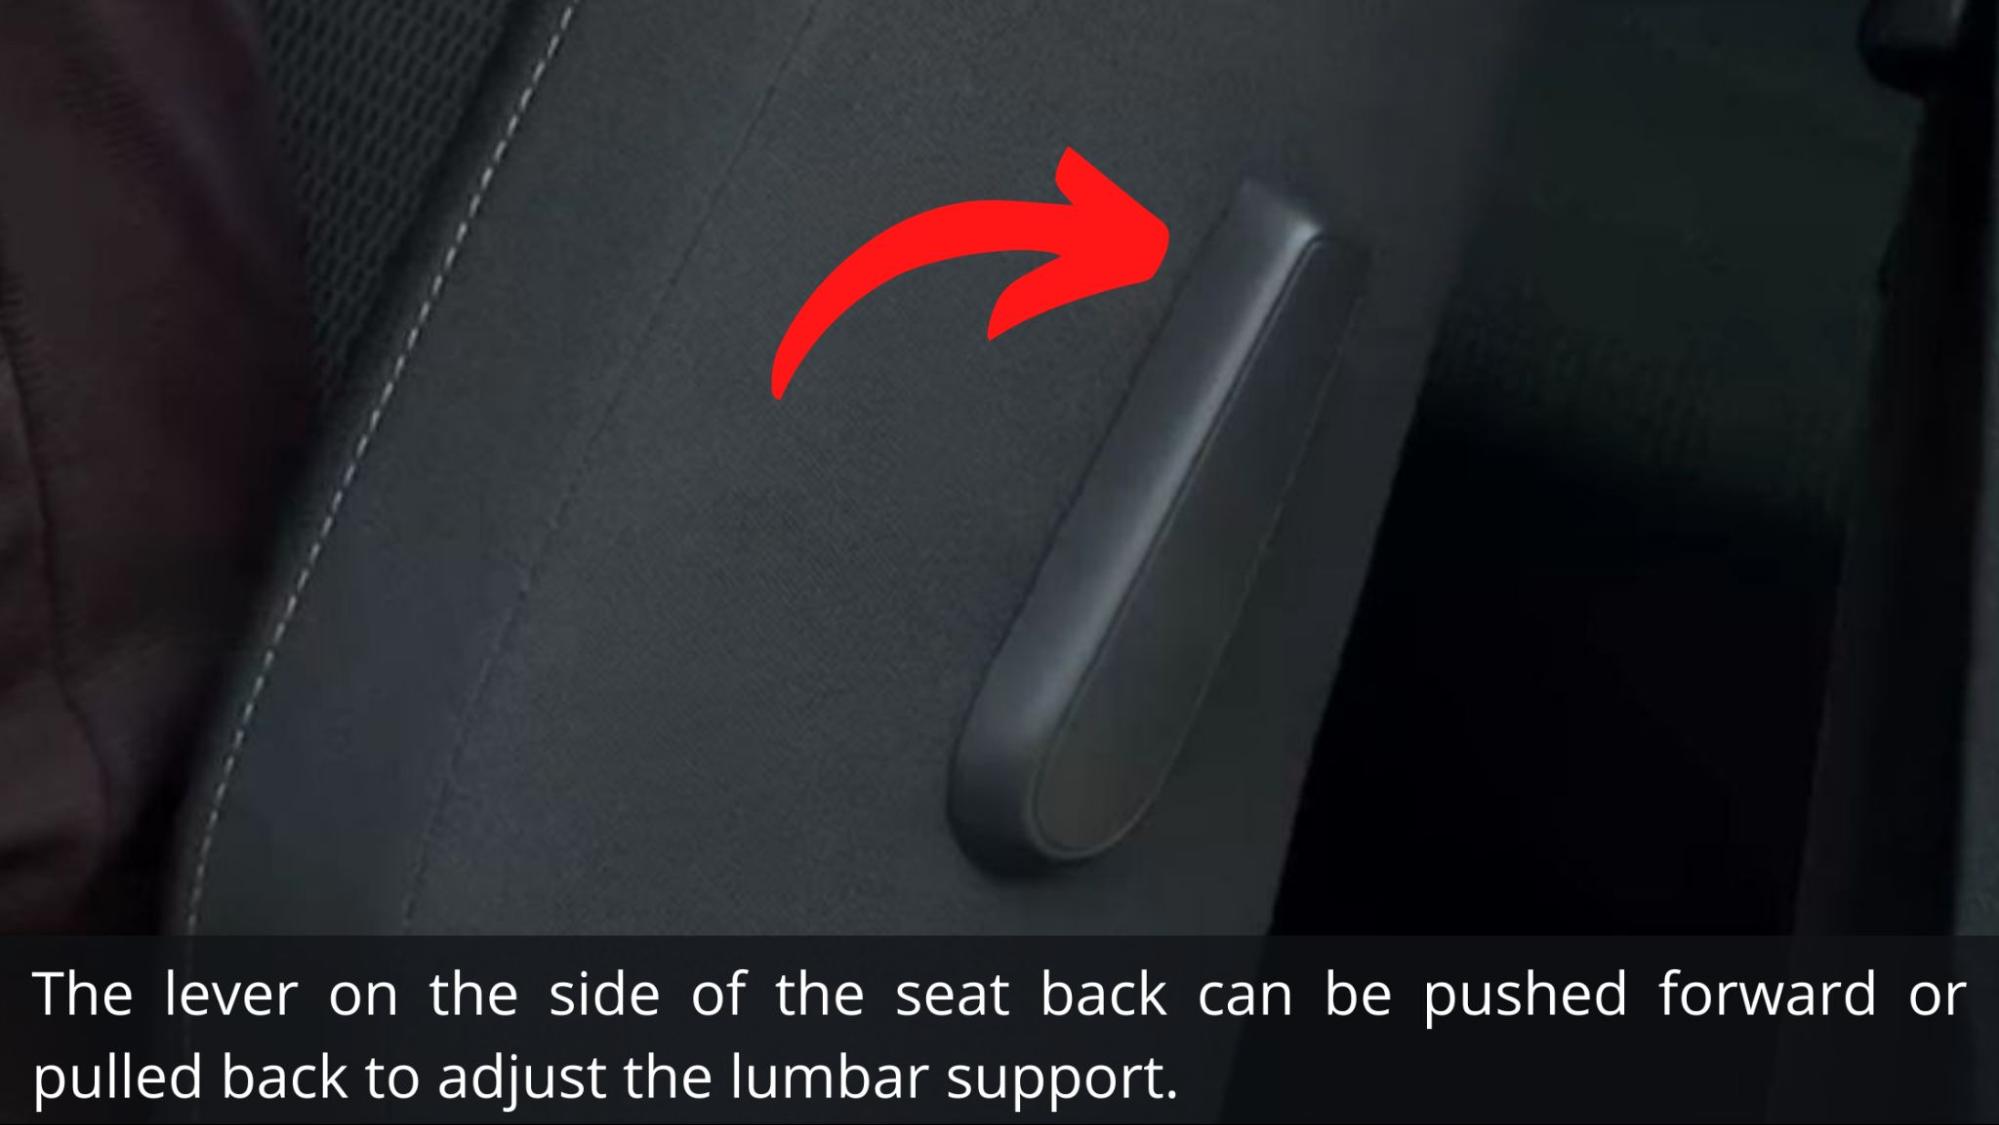 Adjust the seat position